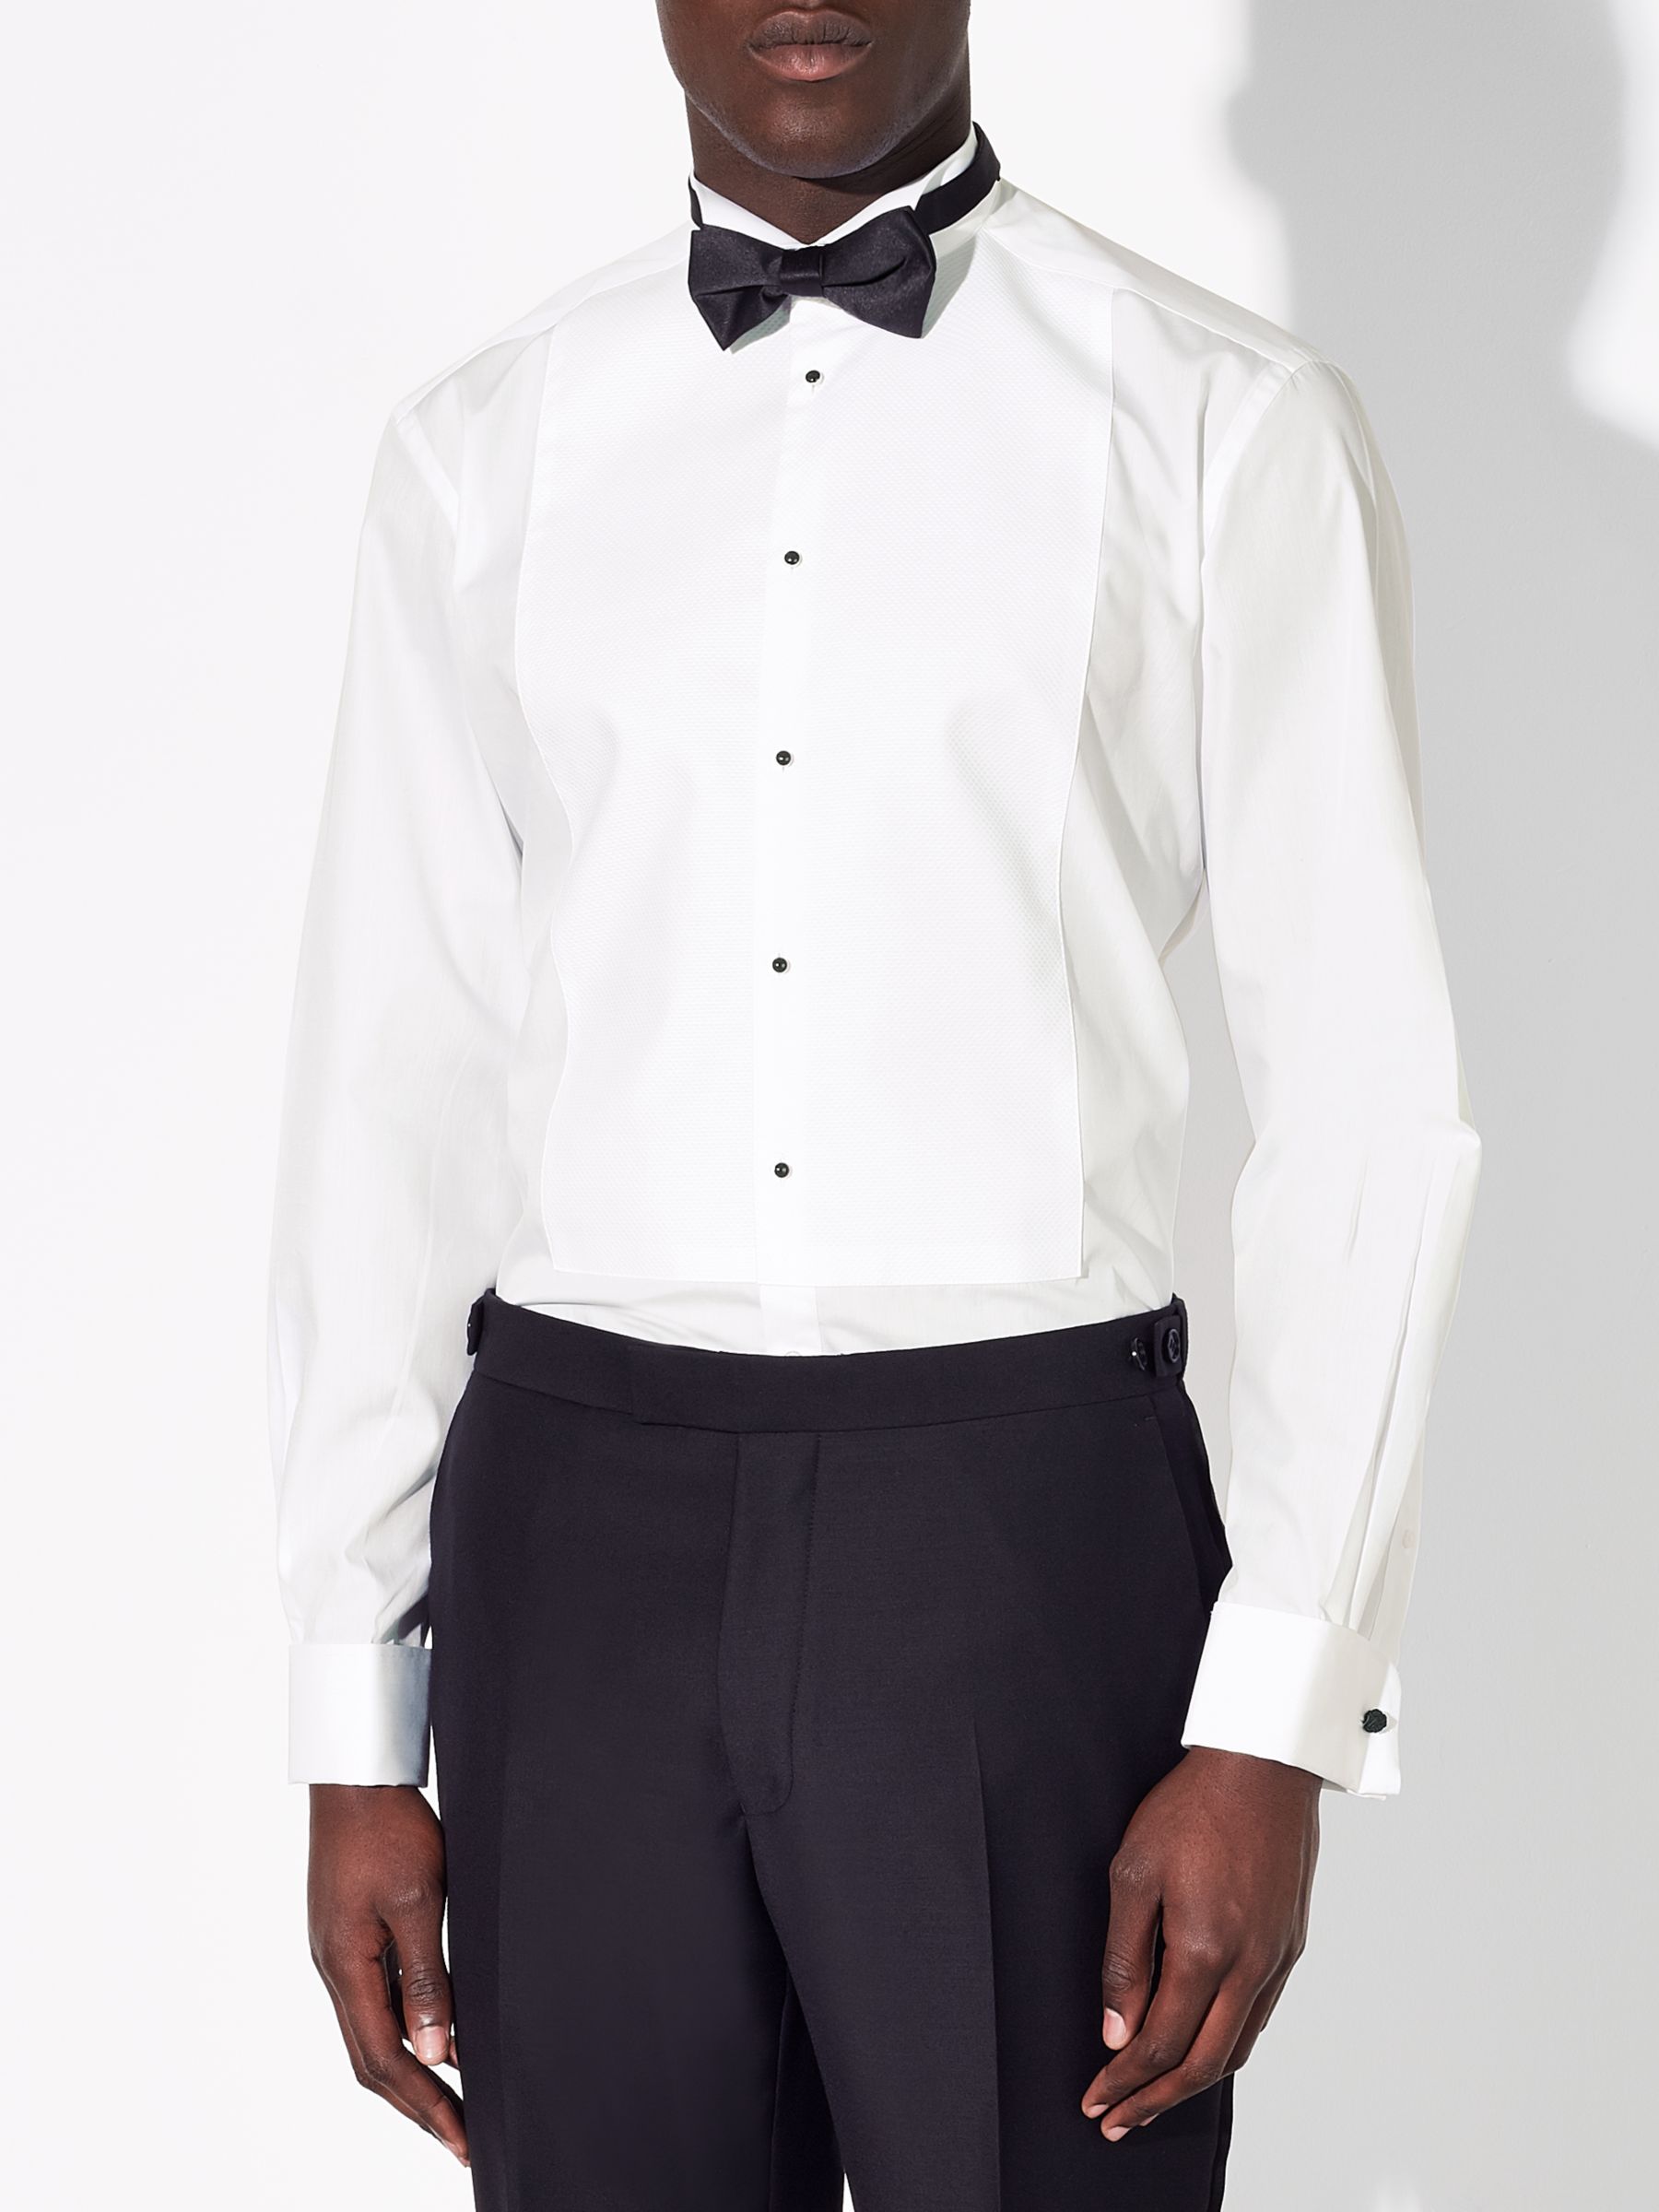 John Lewis & Partners Marcello Wing Collar Regular Fit Dress Shirt, White